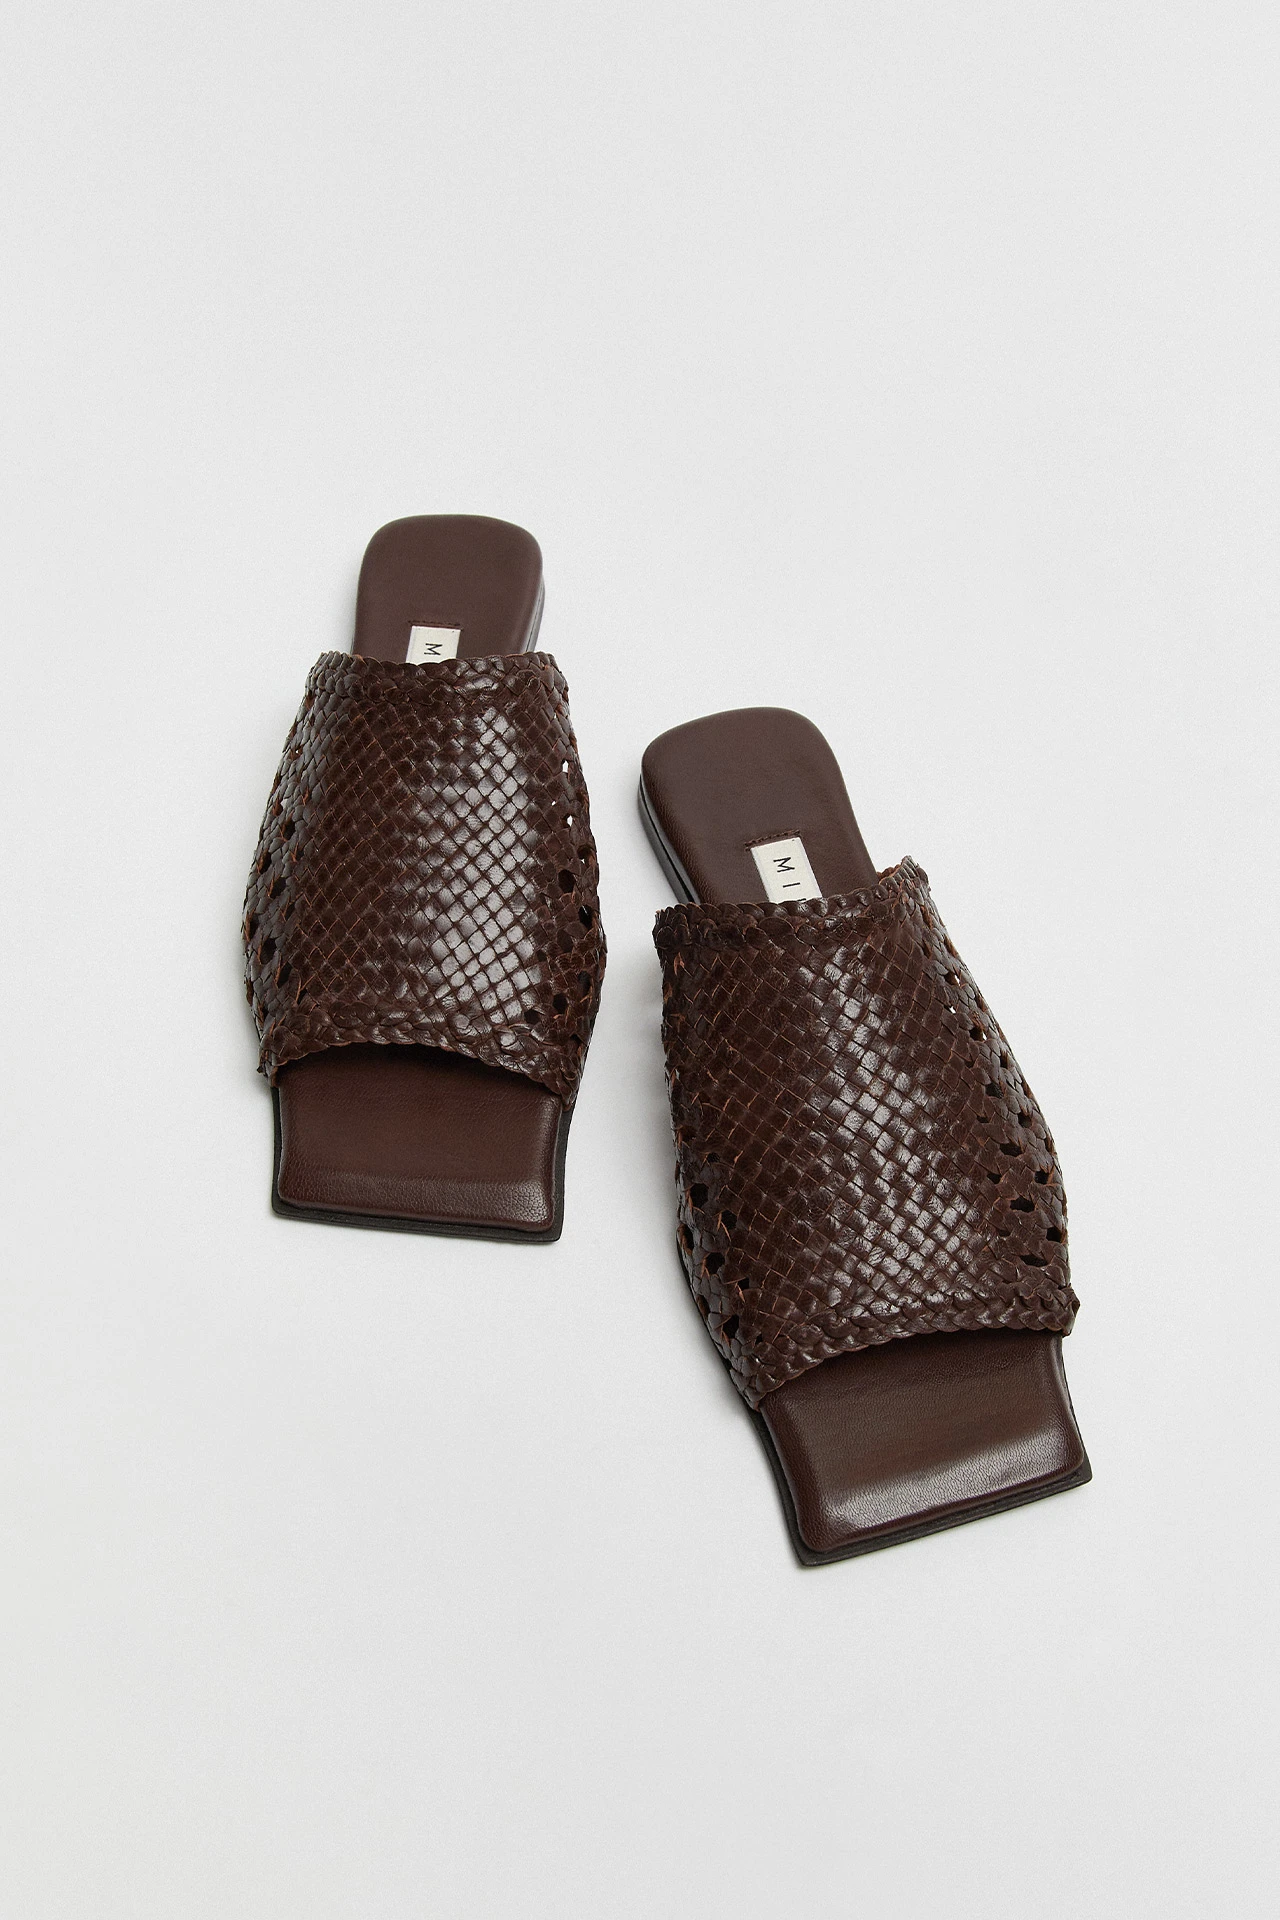 Miista-mayra-chocolate-brown-sandal-02